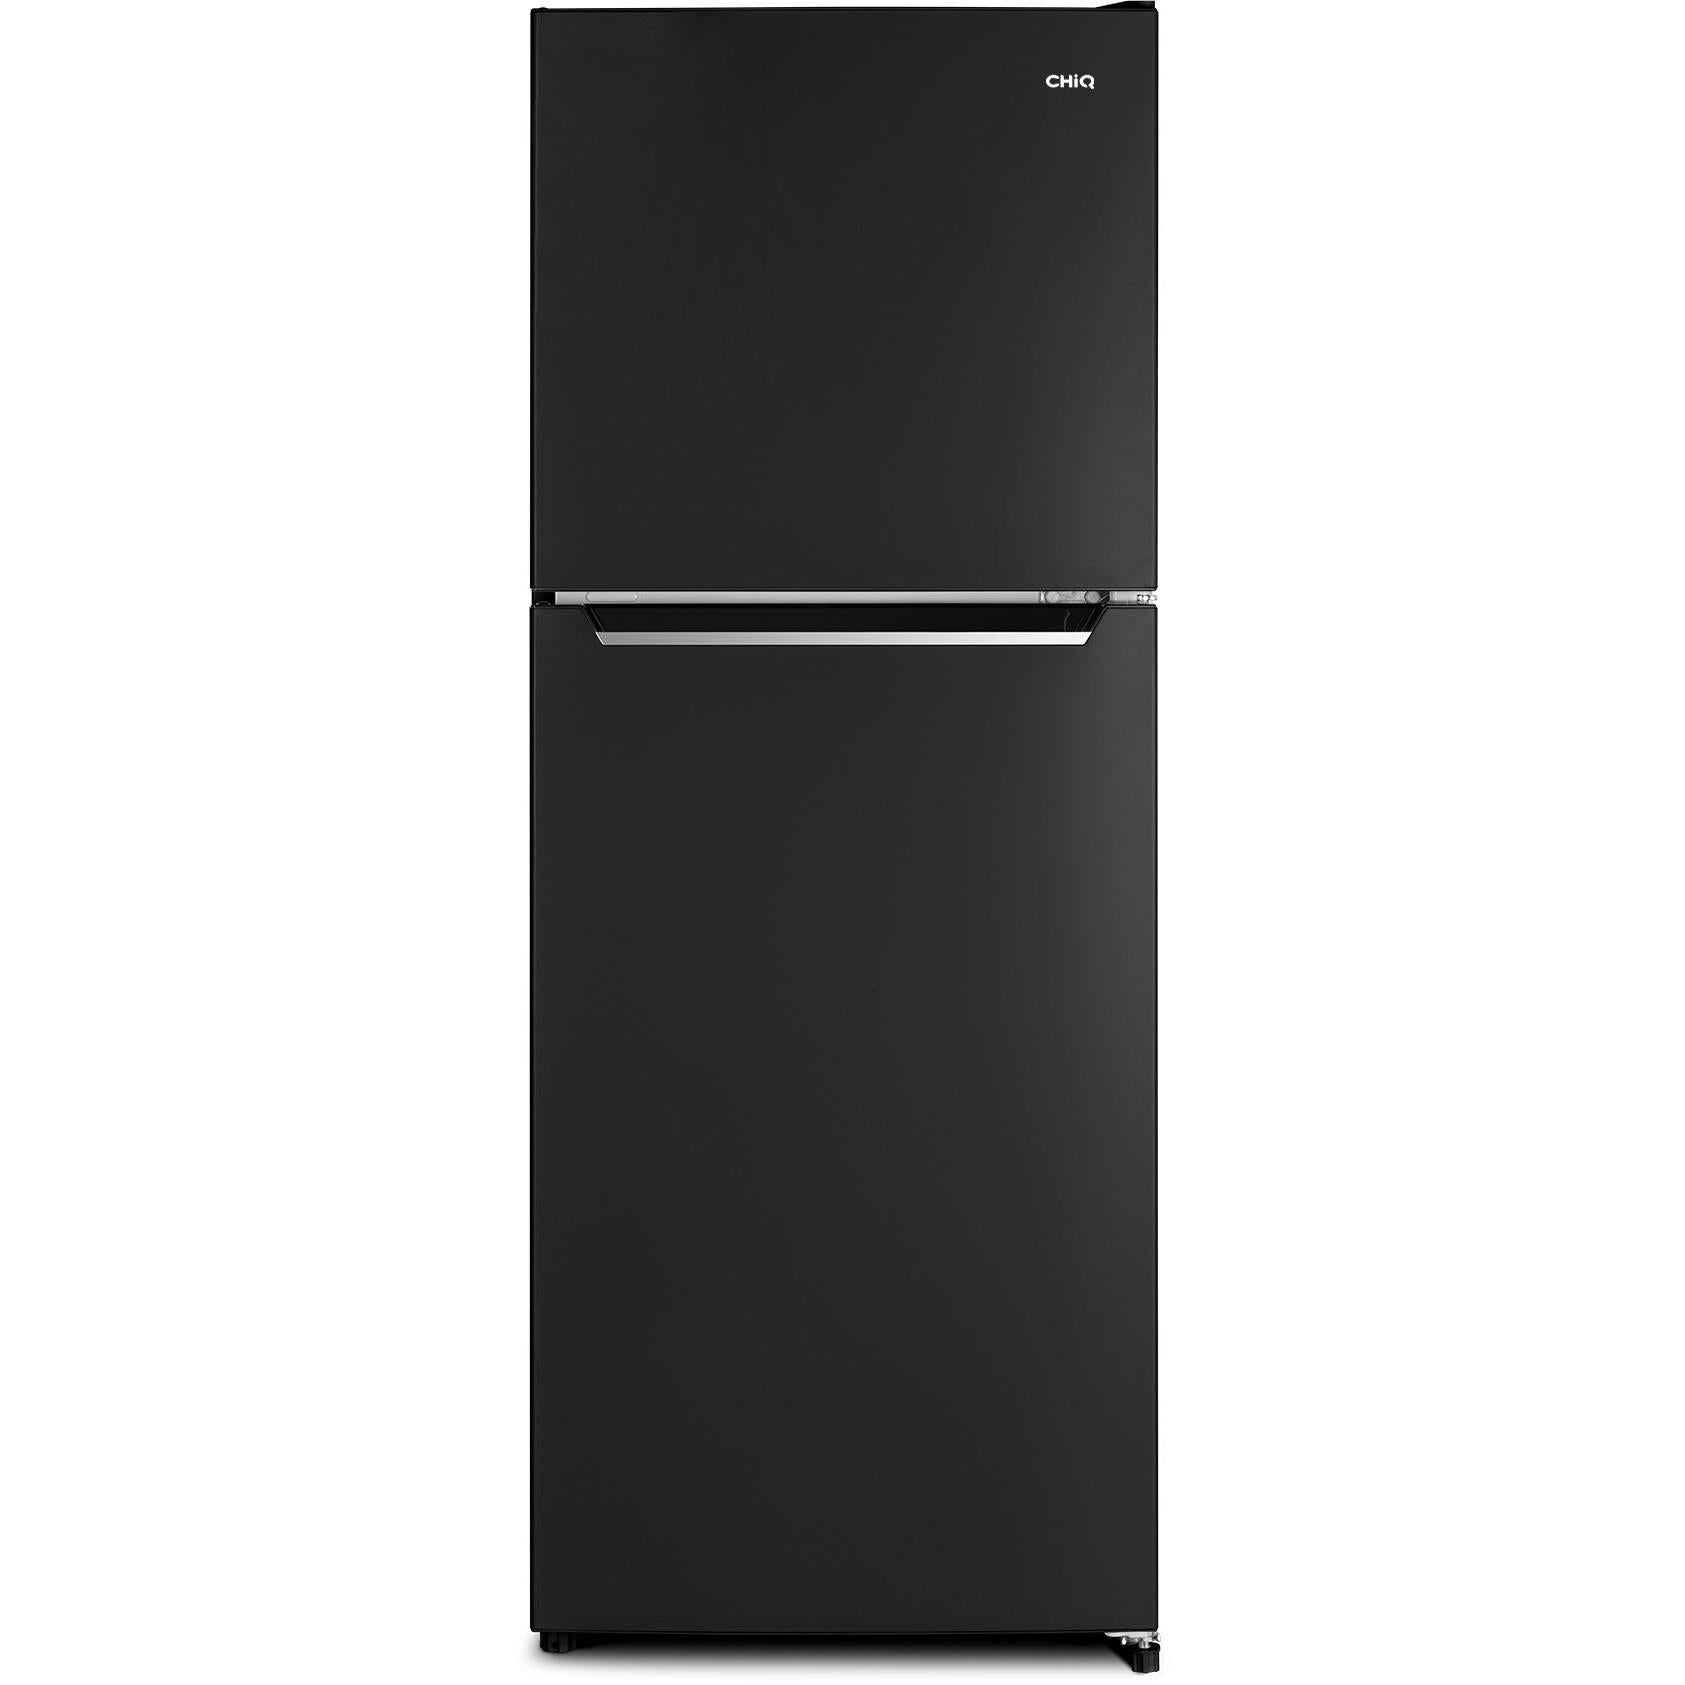 chiq ctm201nb3 202l top mount fridge (black)